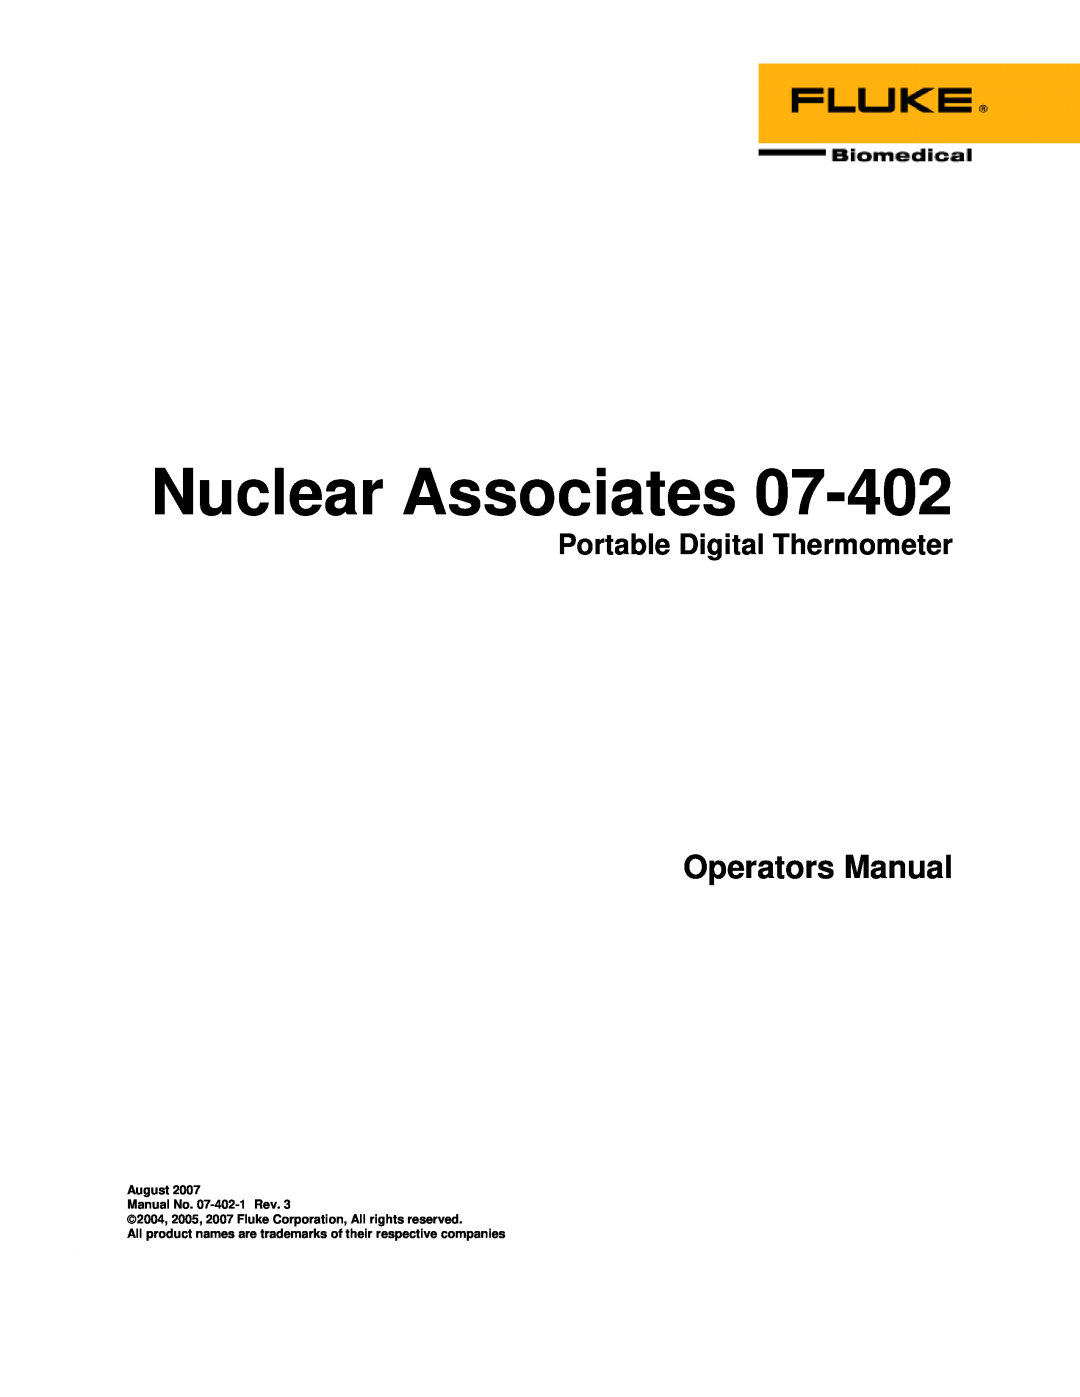 Fluke manual Portable Digital Thermometer, Nuclear Associates, Operators Manual, August Manual No. 07-402-1 Rev 